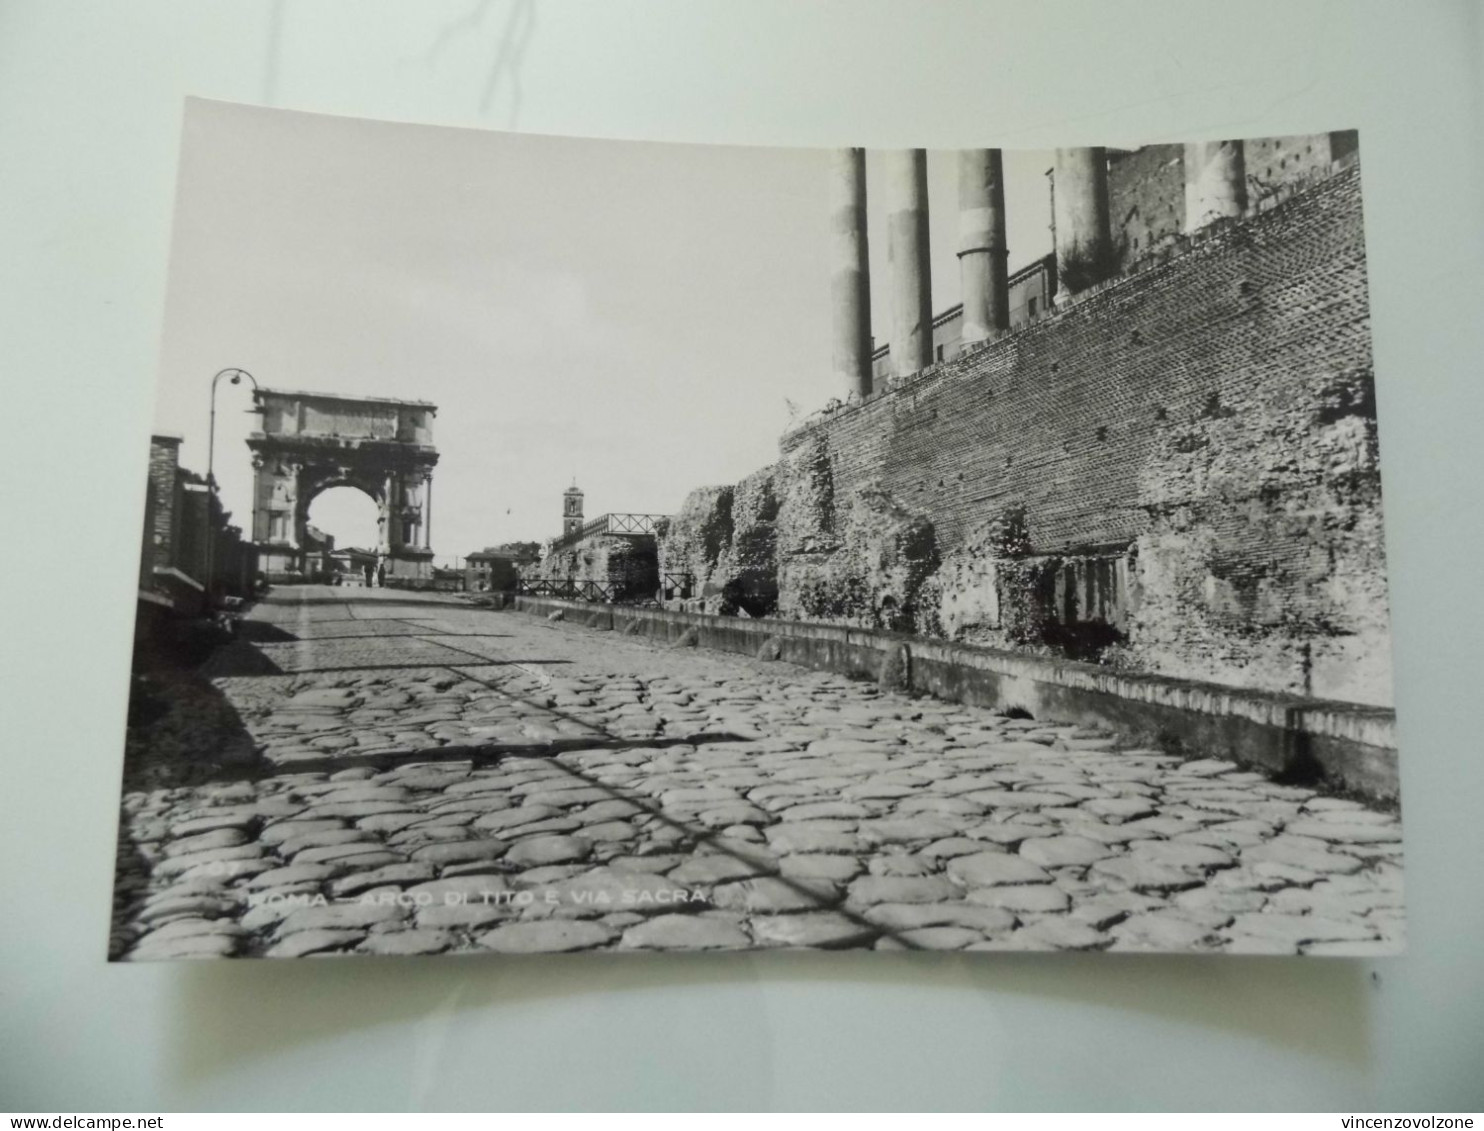 Cartolina  "ROMA  - Arco Di Tito E Via Sacra" - Multi-vues, Vues Panoramiques